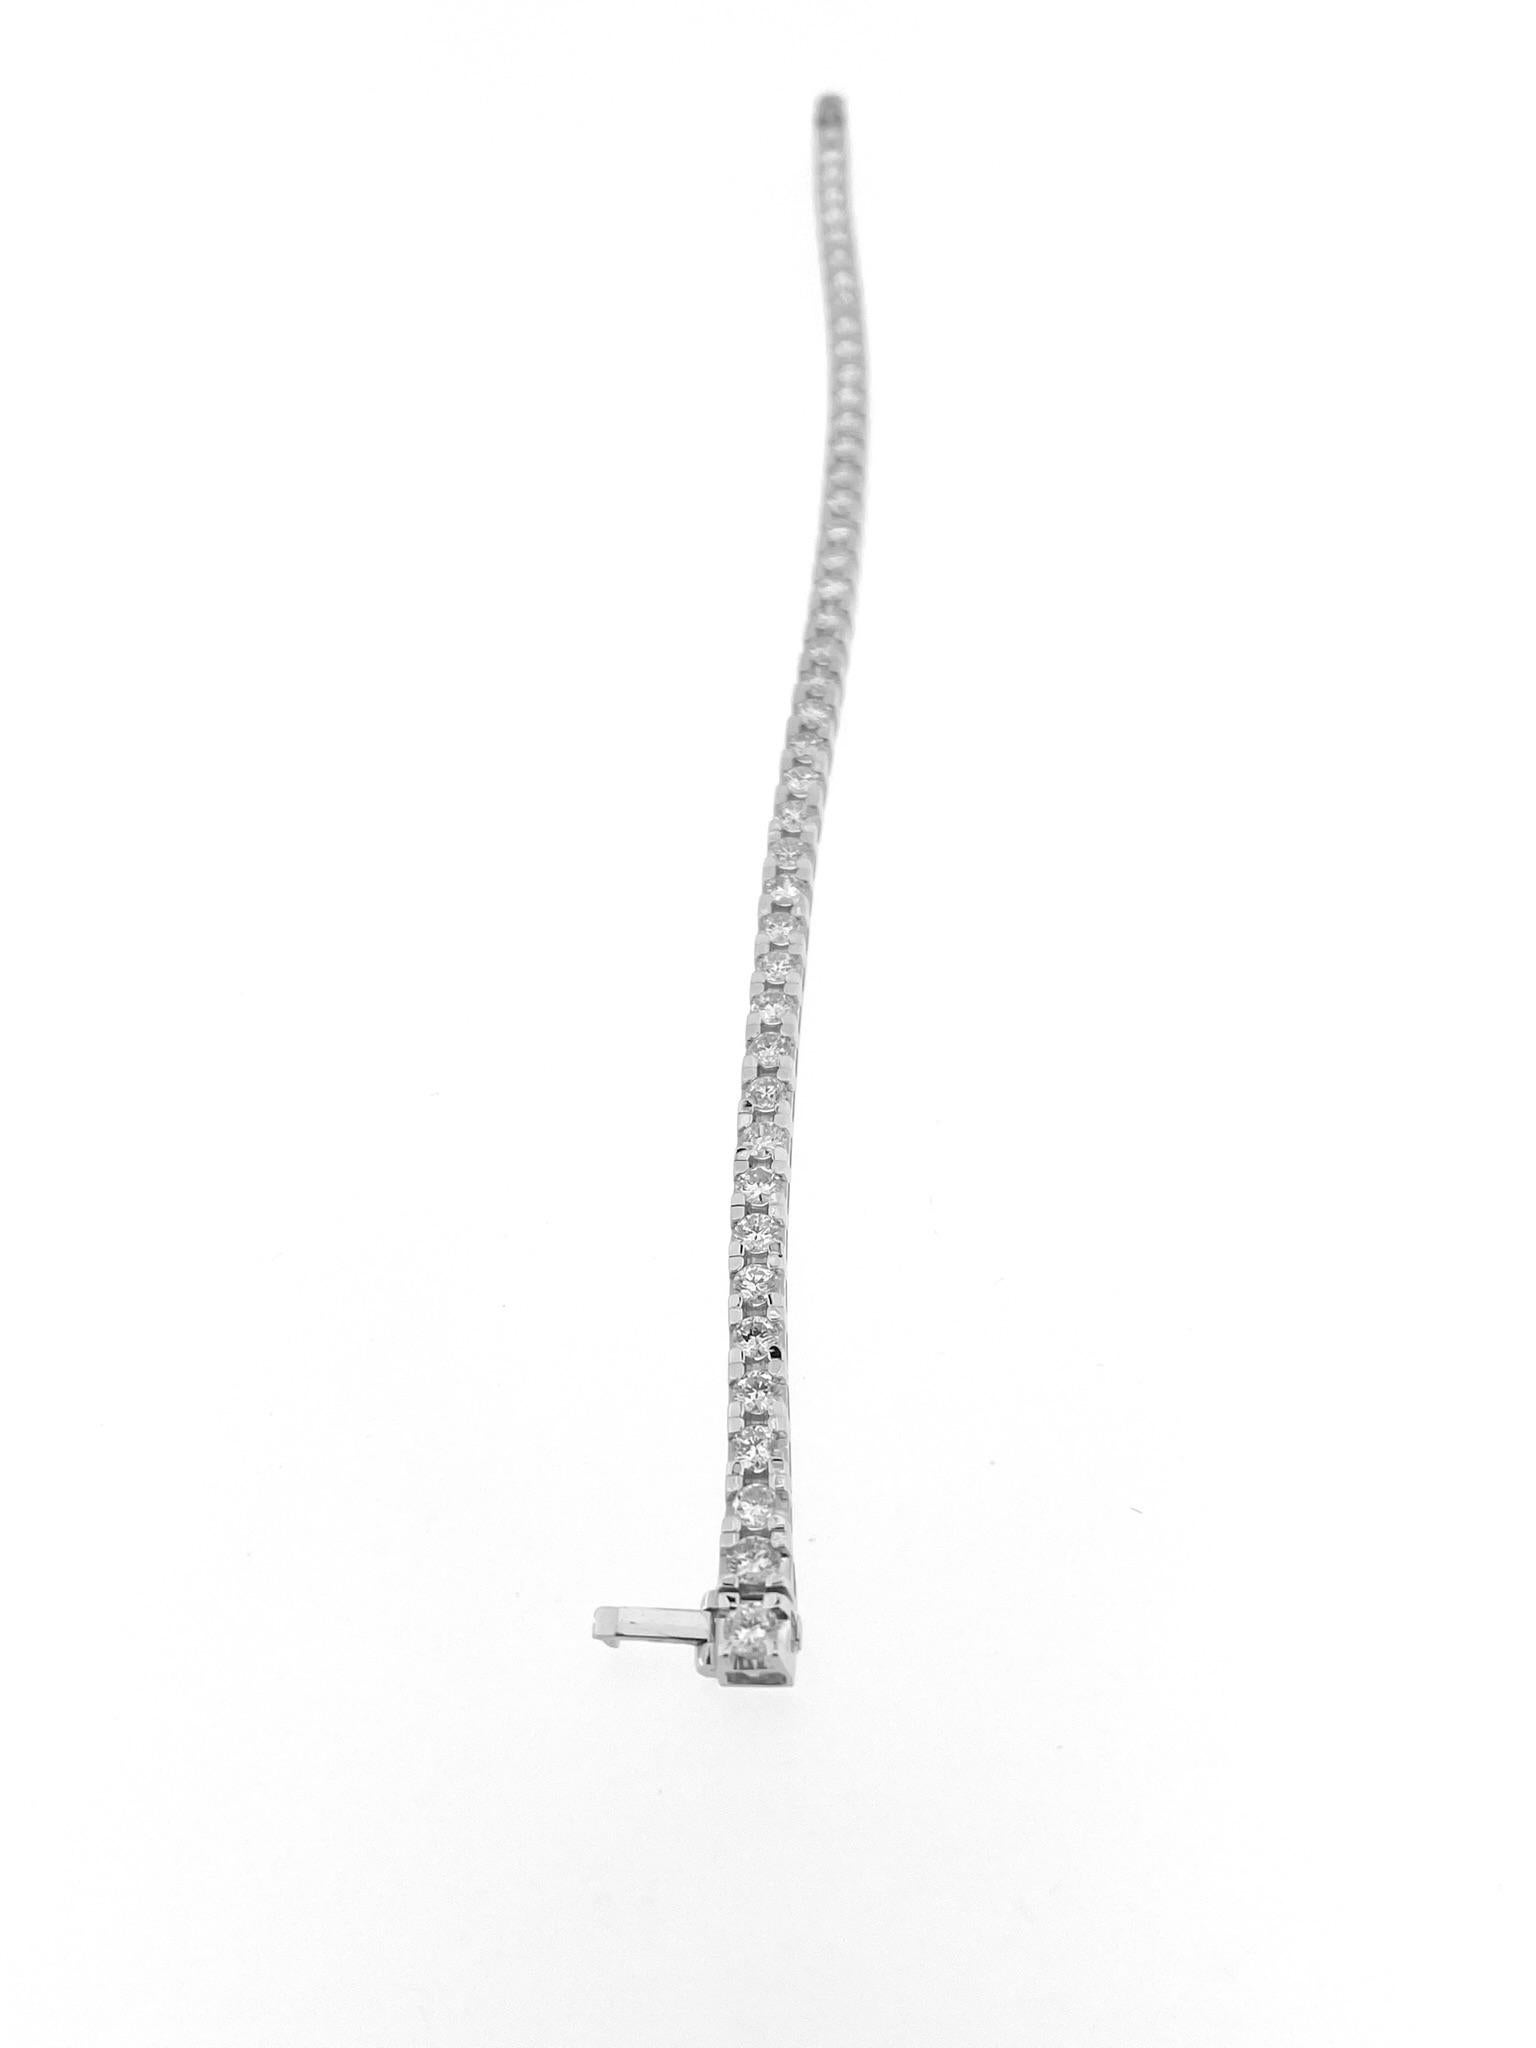 Brilliant Cut HRD Certified Tennis Bracelet White Gold 5.60ct Diamonds For Sale